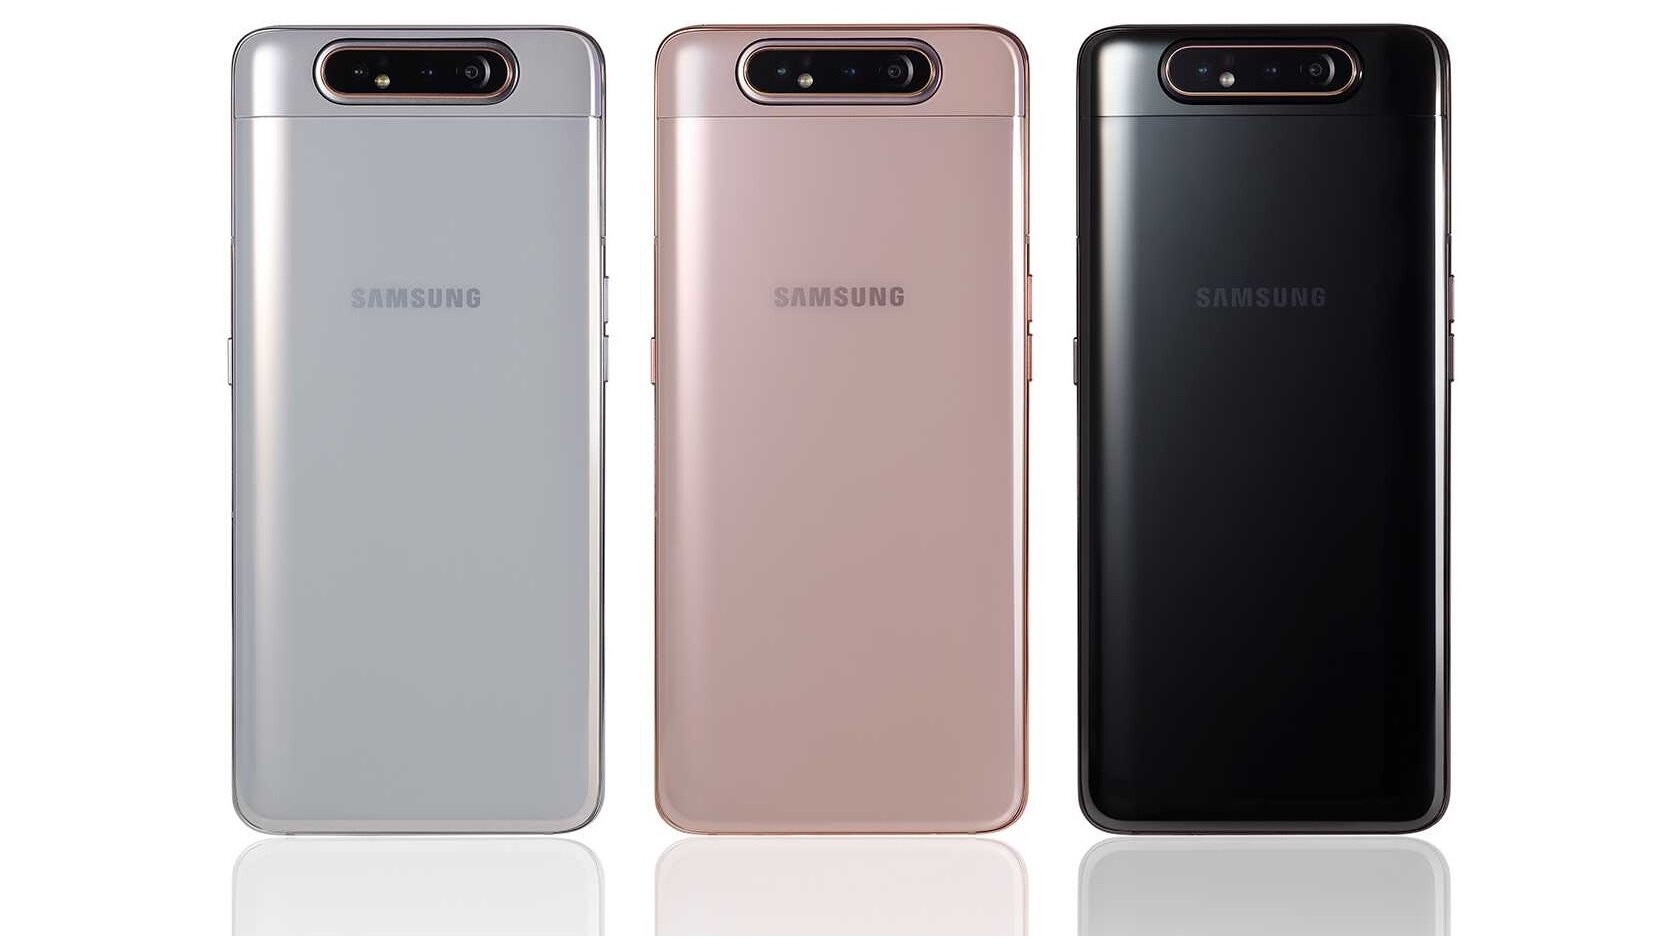 H Samsung ανακοίνωσε το Galaxy A80 με περιστρεφόμενη pop-up κάμερα 48MP